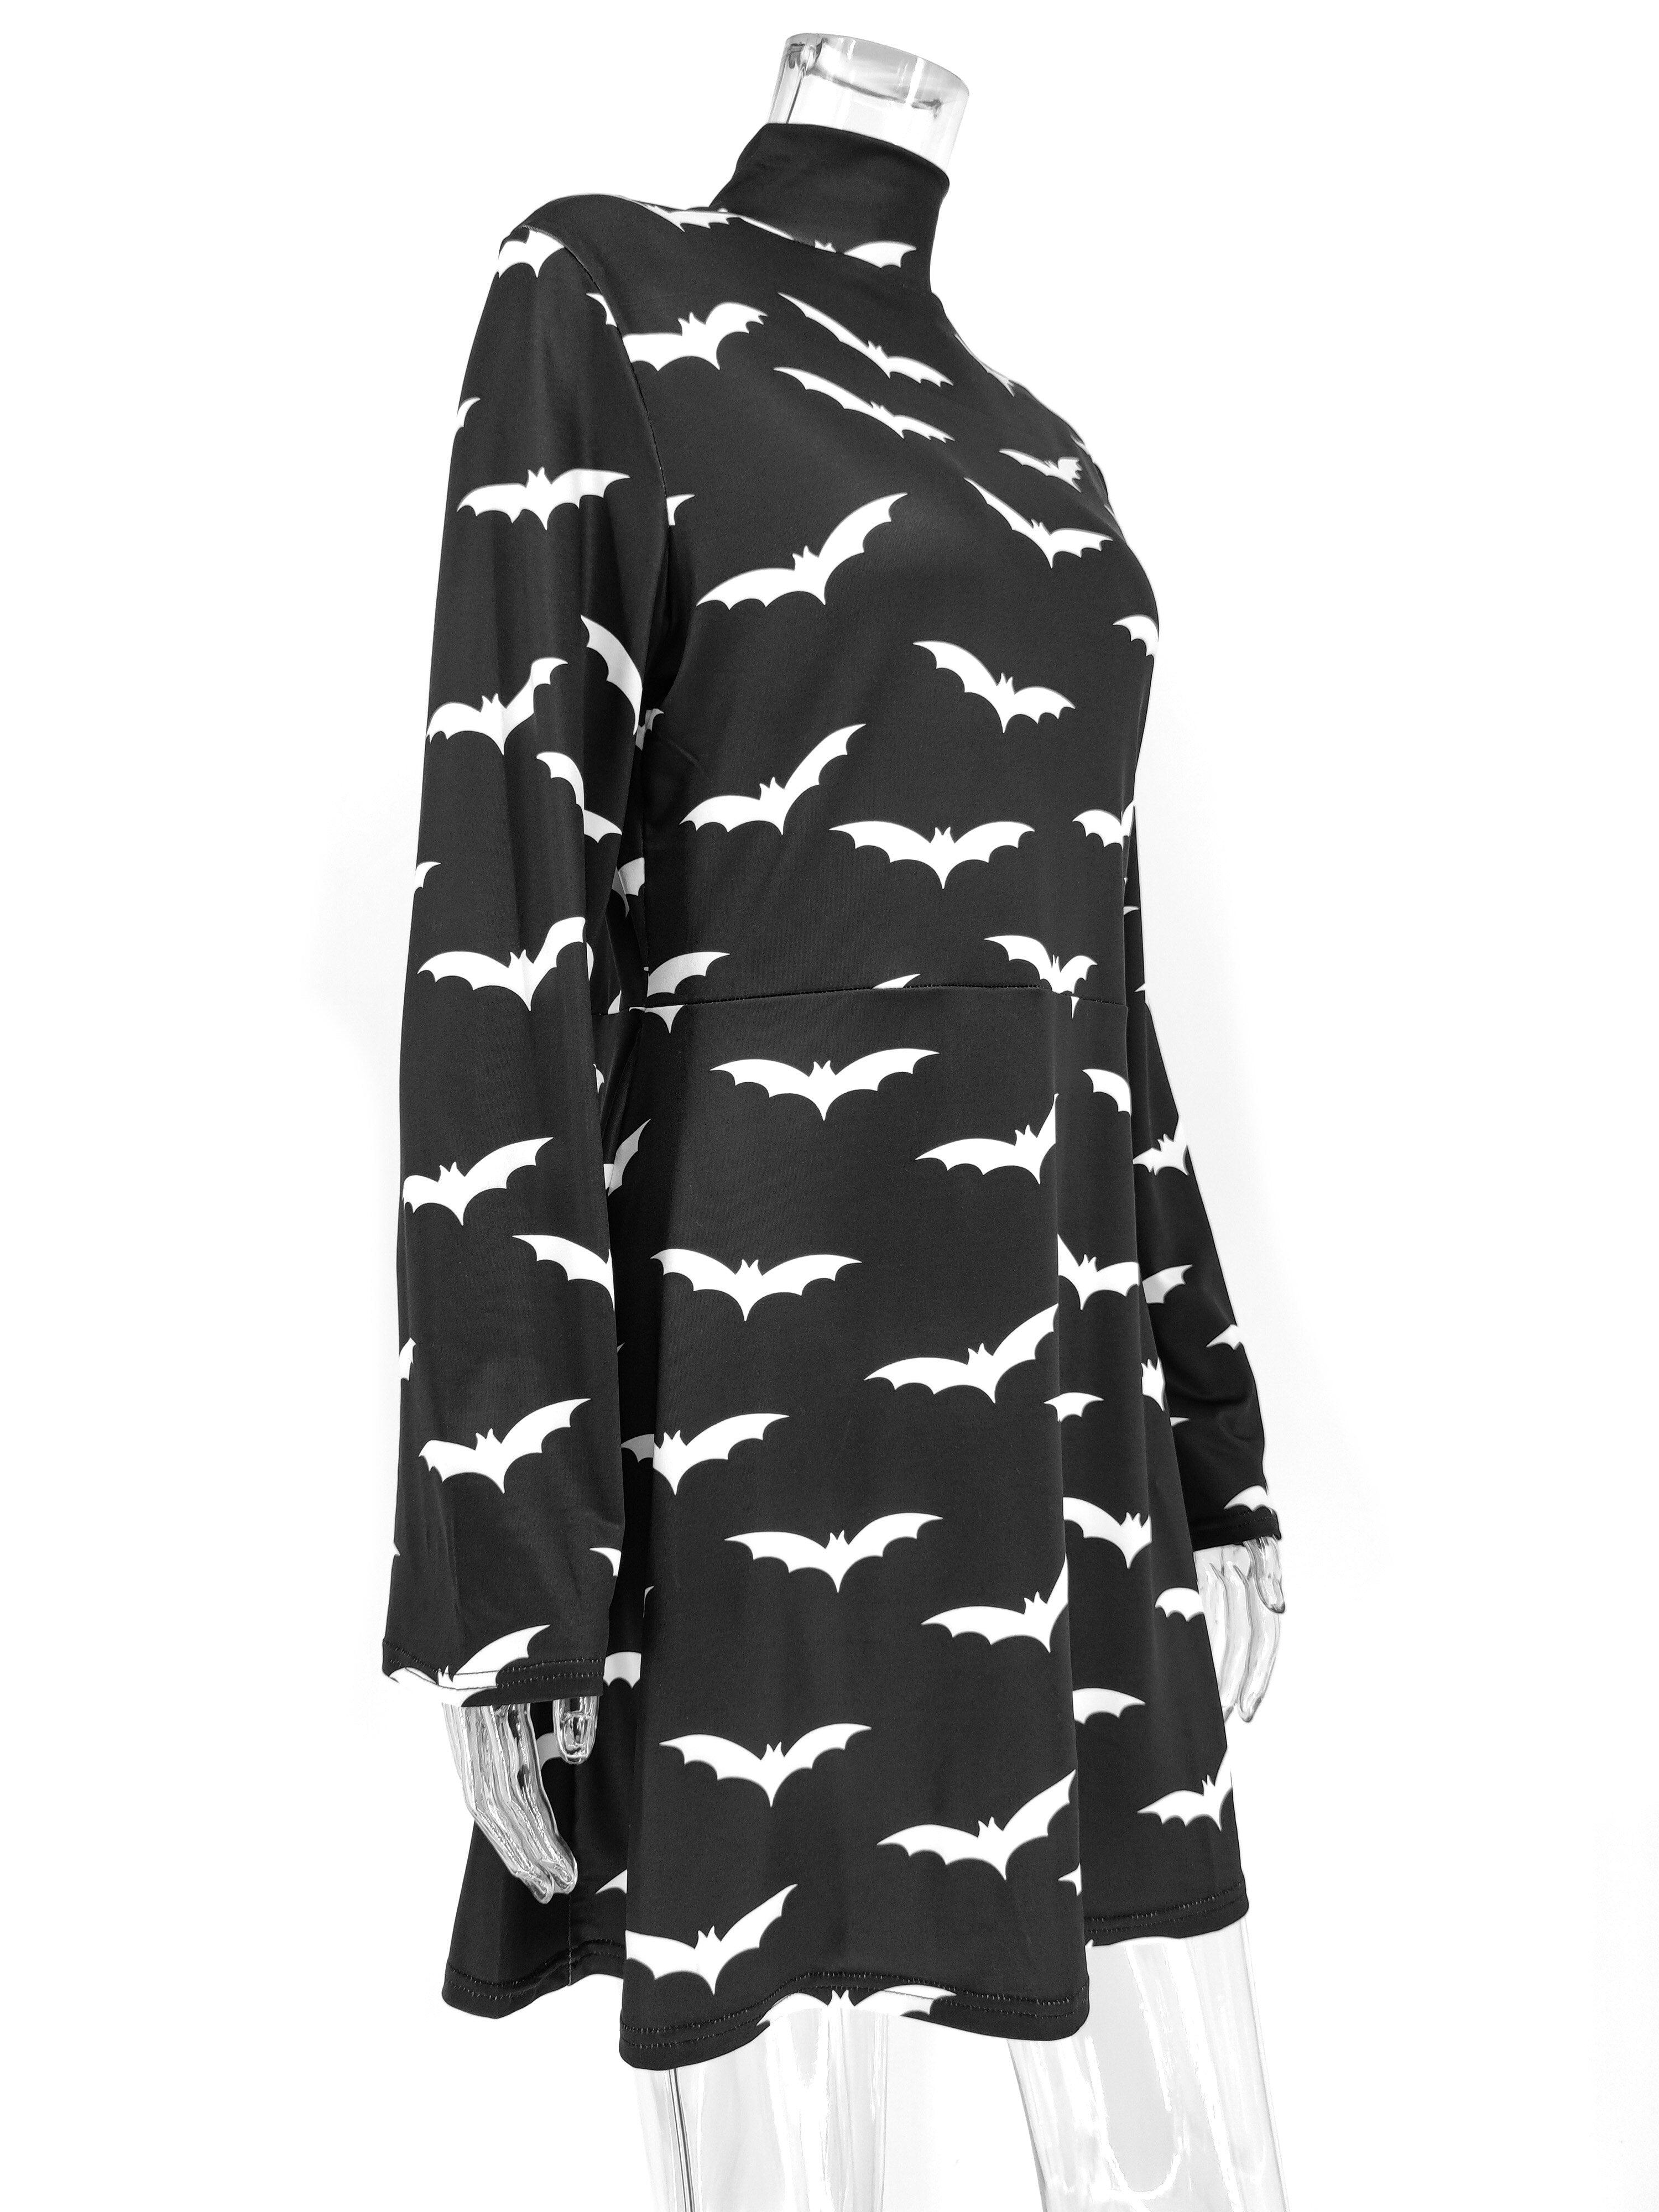 Gothic Black Bat Printed Turtleneck Dress, Beautiful Long Sleeve Vestidos For Women - Wonder Skull